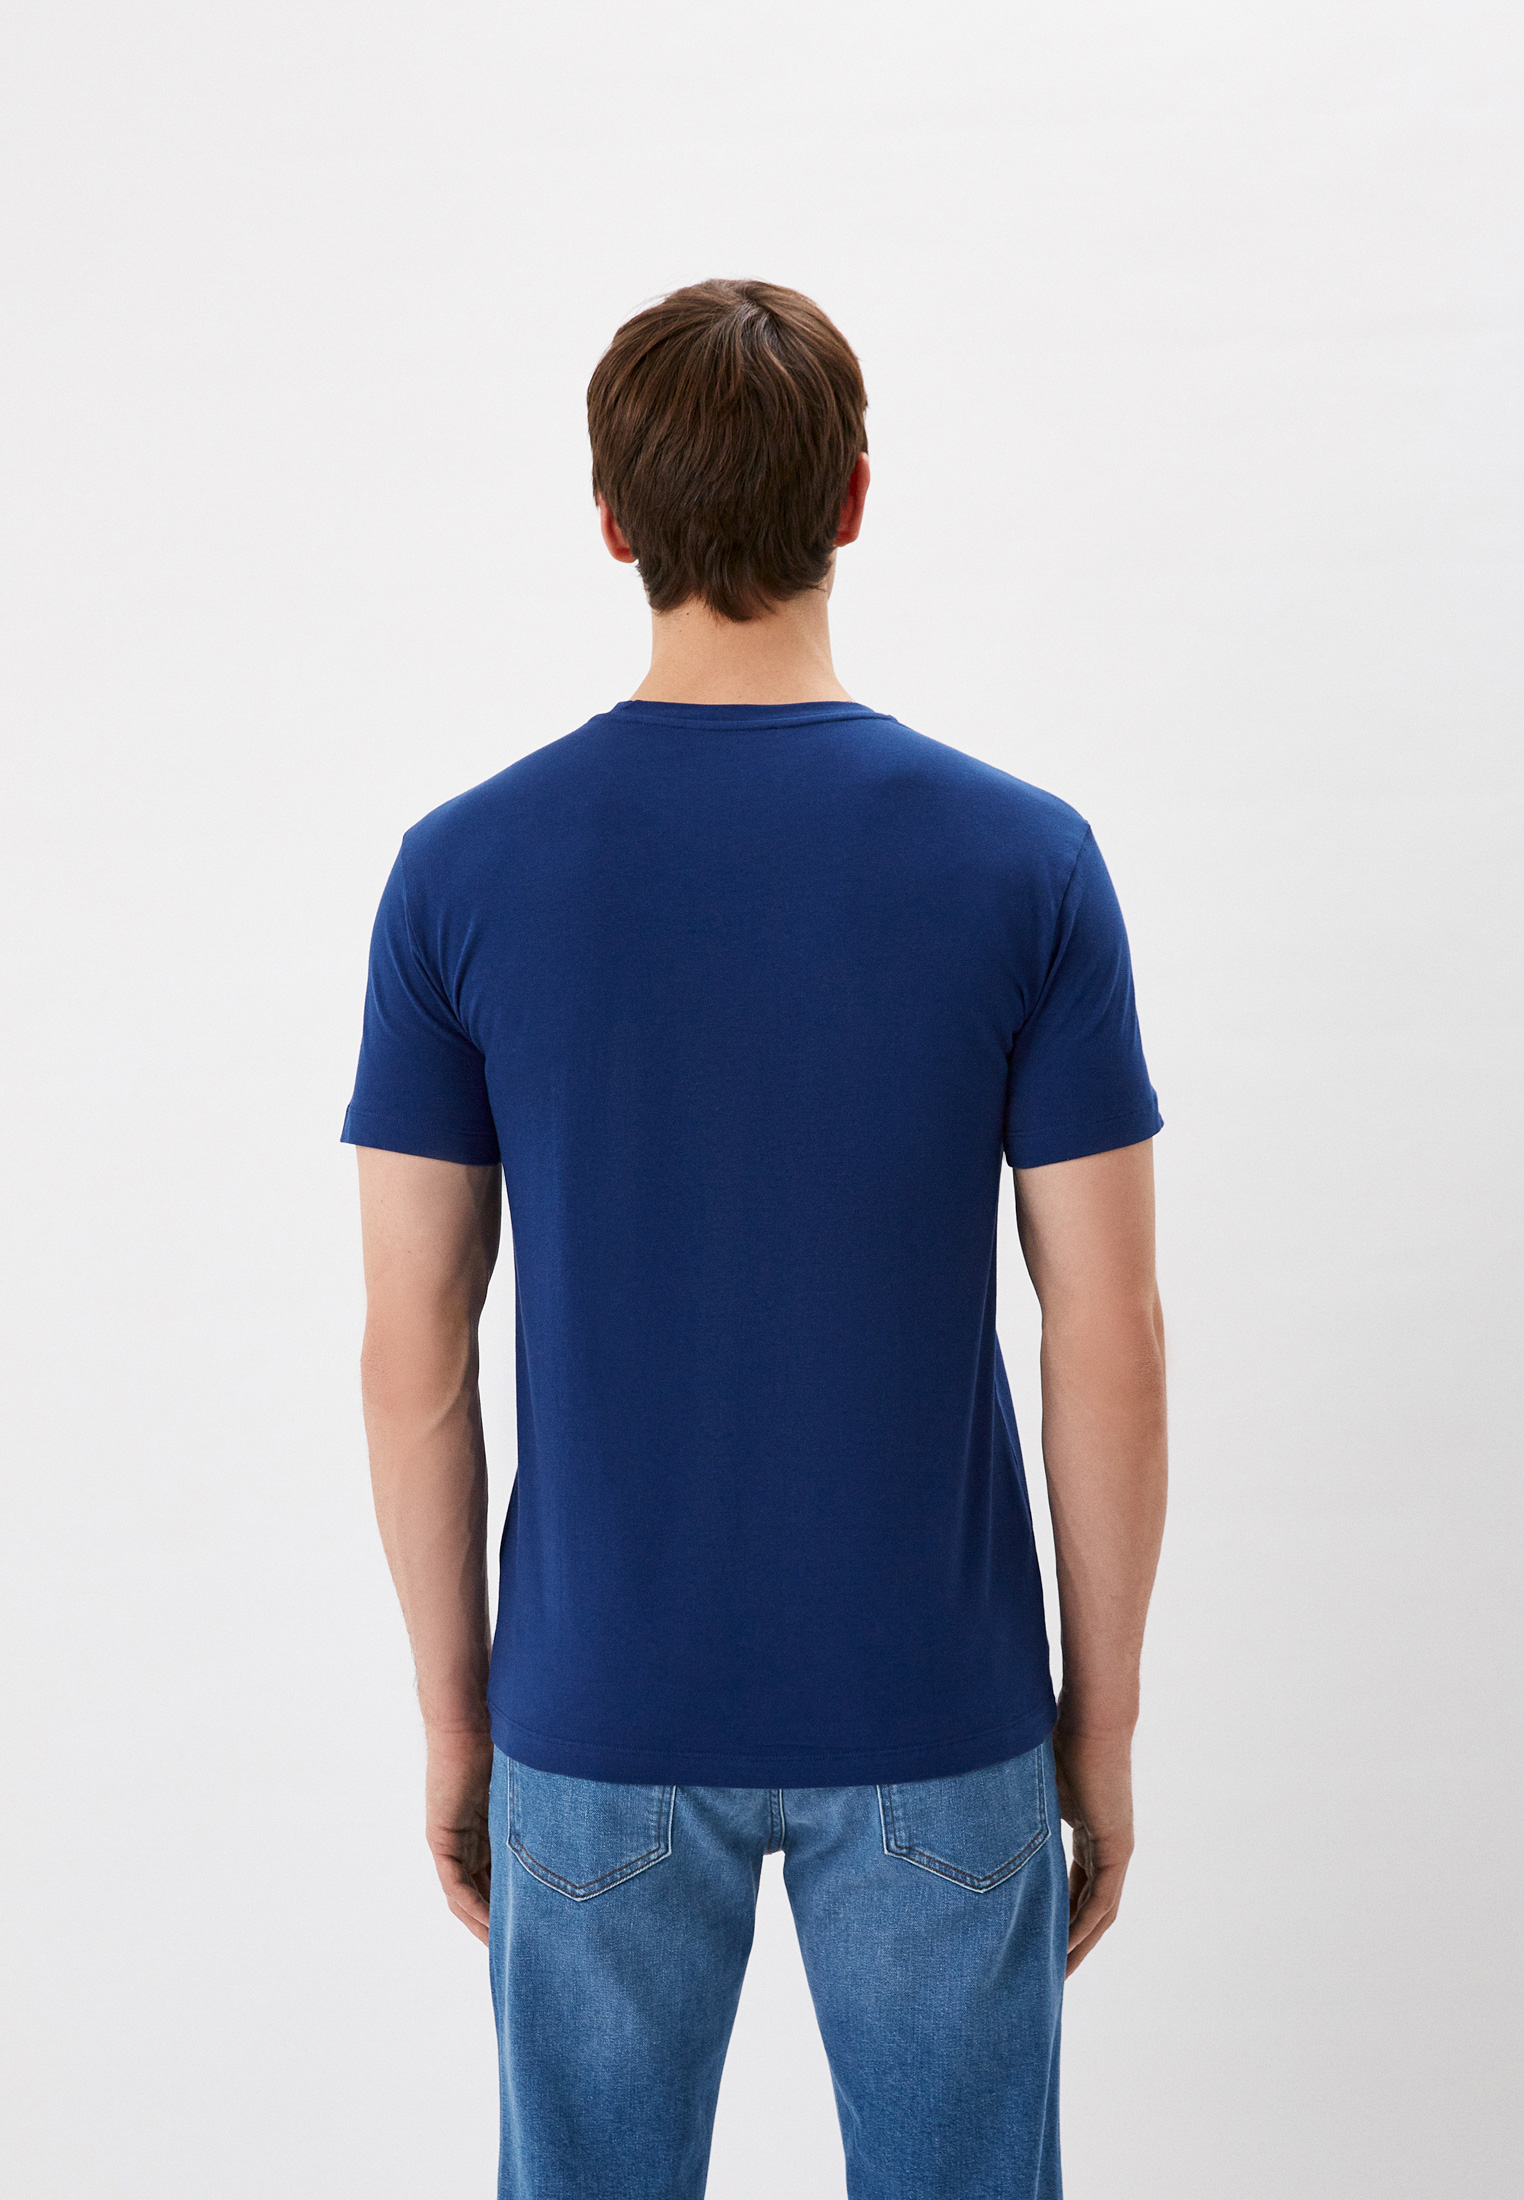 Мужская футболка Trussardi (Труссарди) 52T00600-1T003614: изображение 3